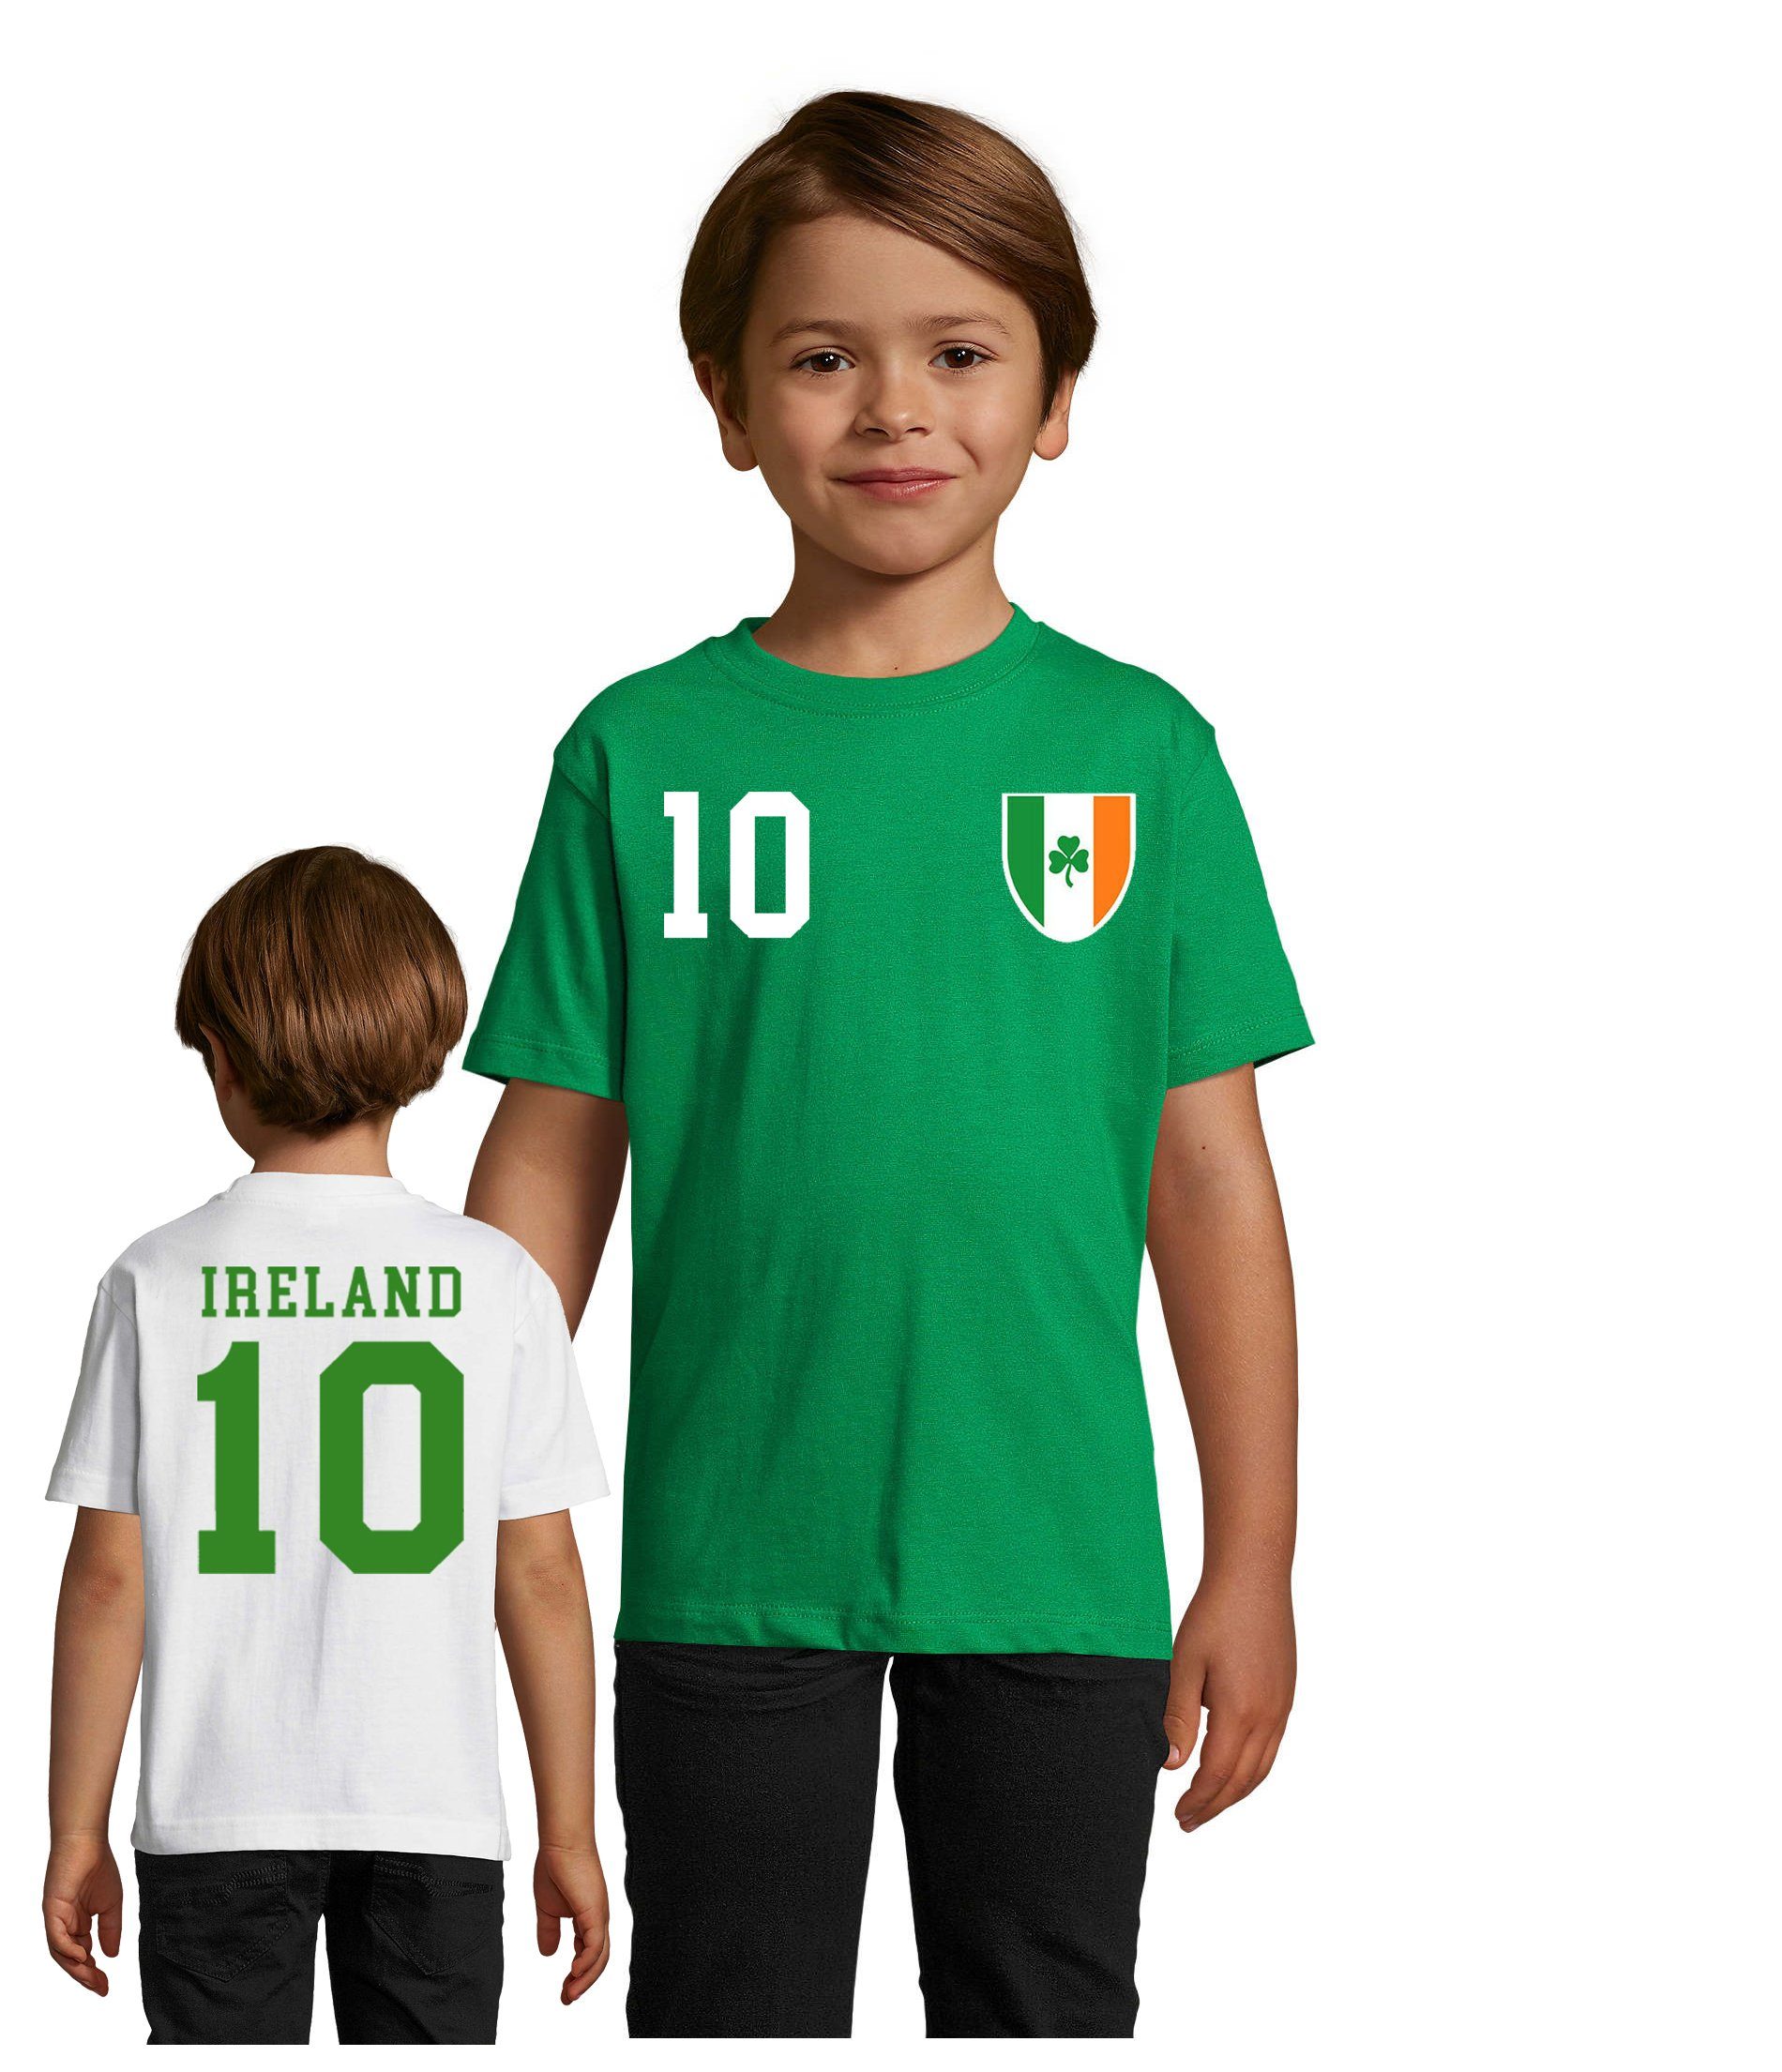 Blondie & Brownie T-Shirt Kinder Irland Sport Trikot Fußball Handball Weltmeister WM EM Weiss/Grün | T-Shirts